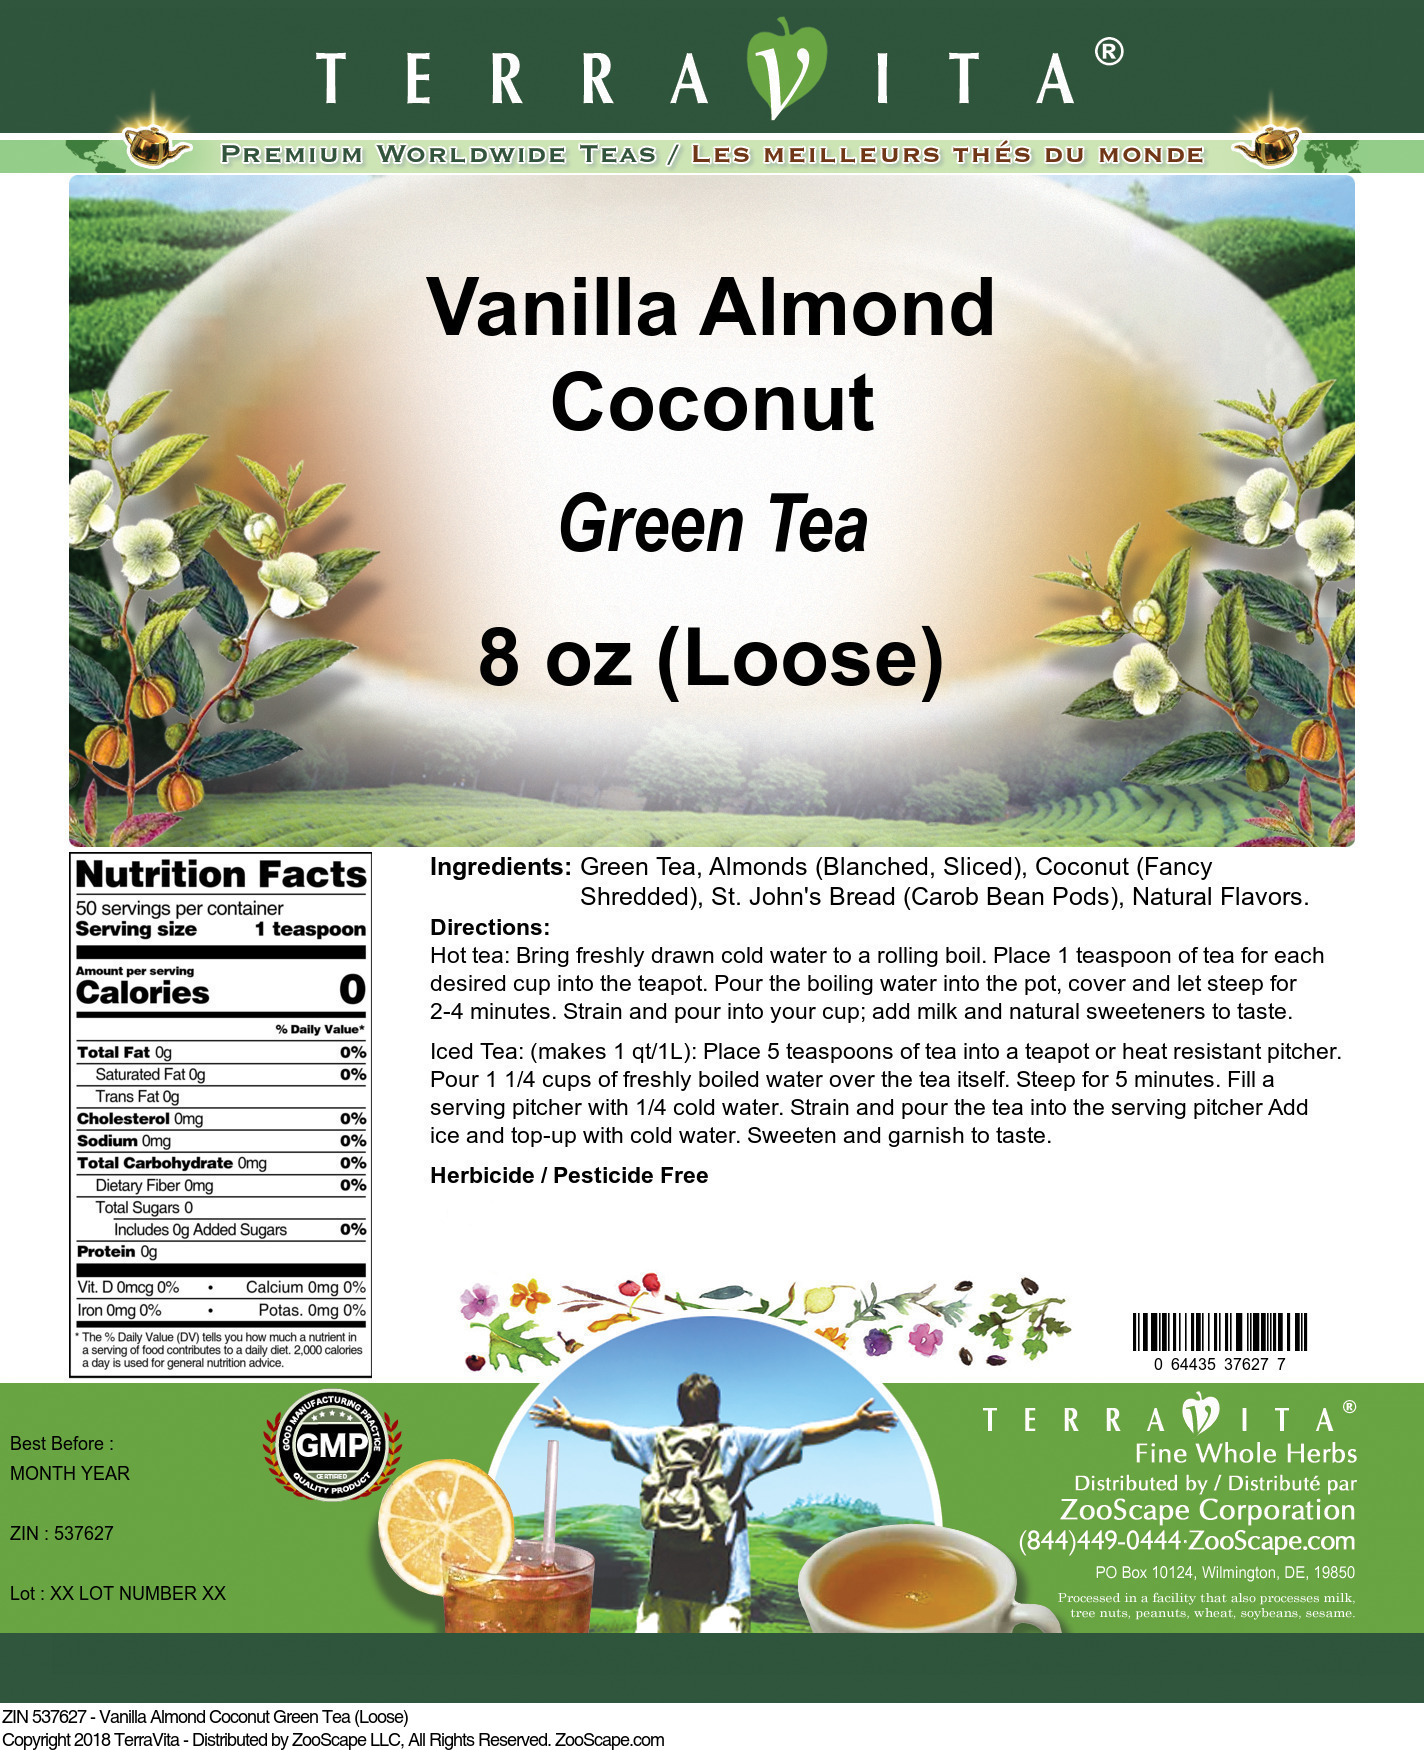 Vanilla Almond Coconut Green Tea (Loose) - Label